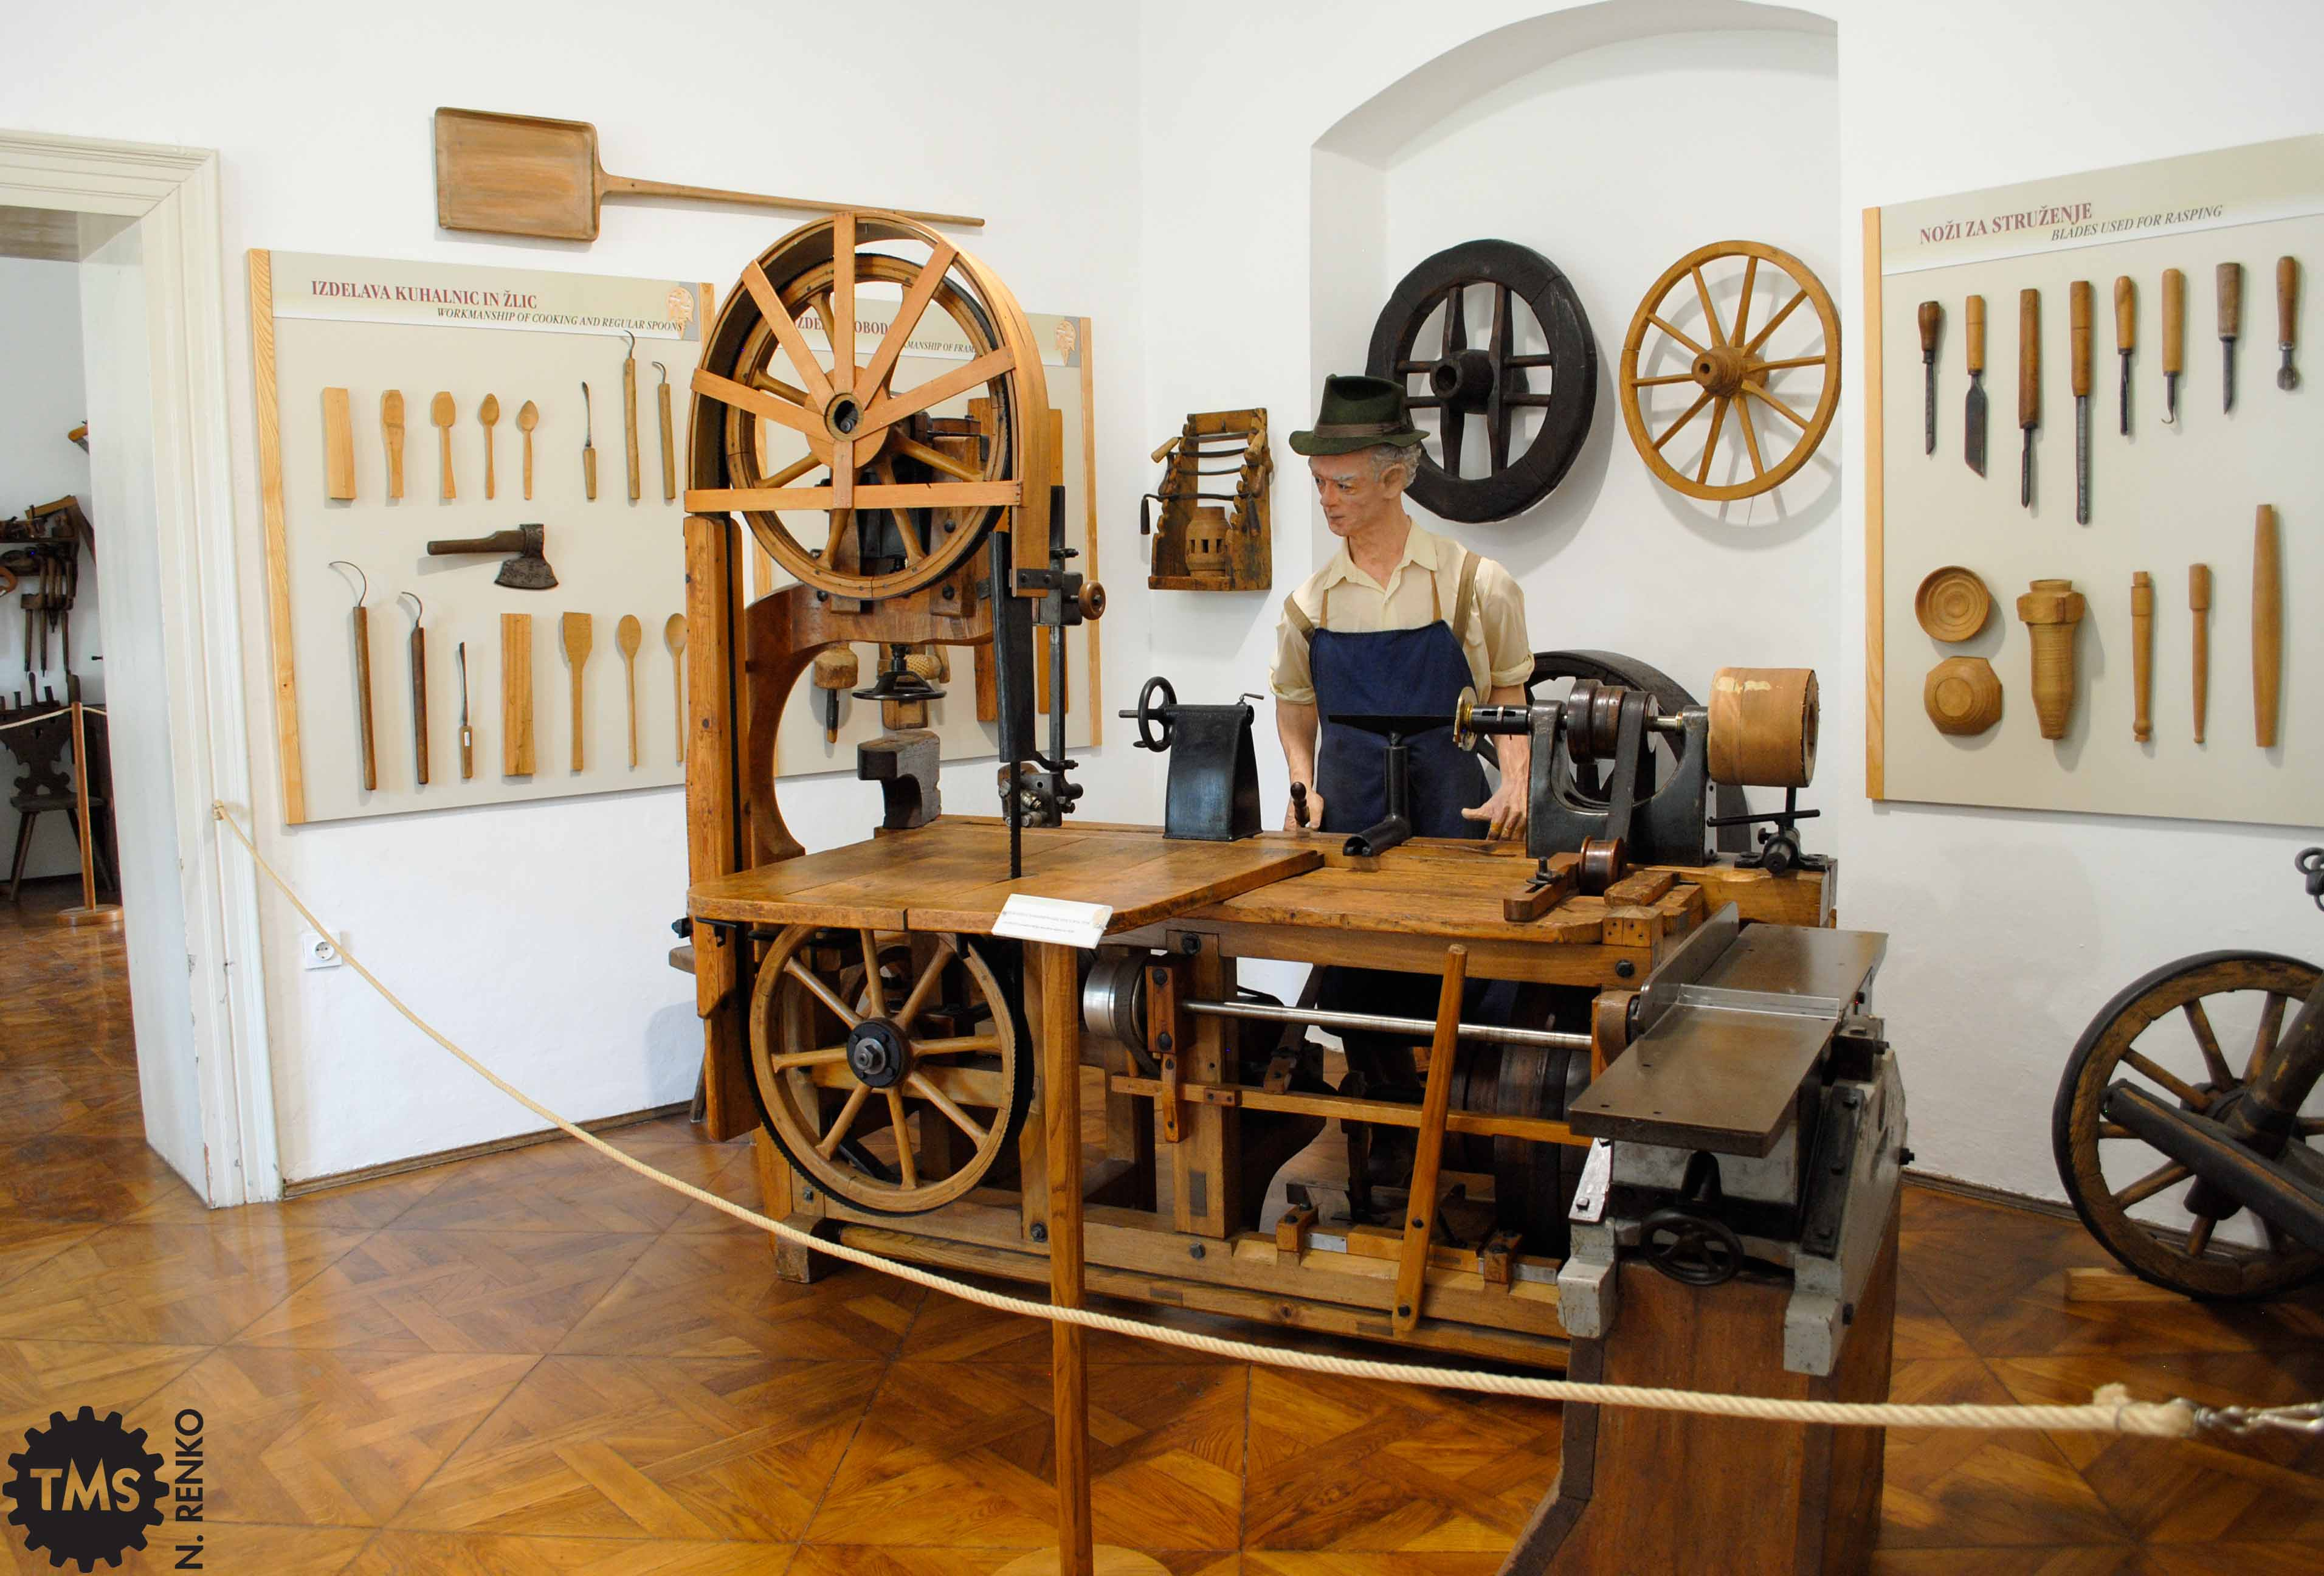 The Technical Museum of Slovenia, Borovnica